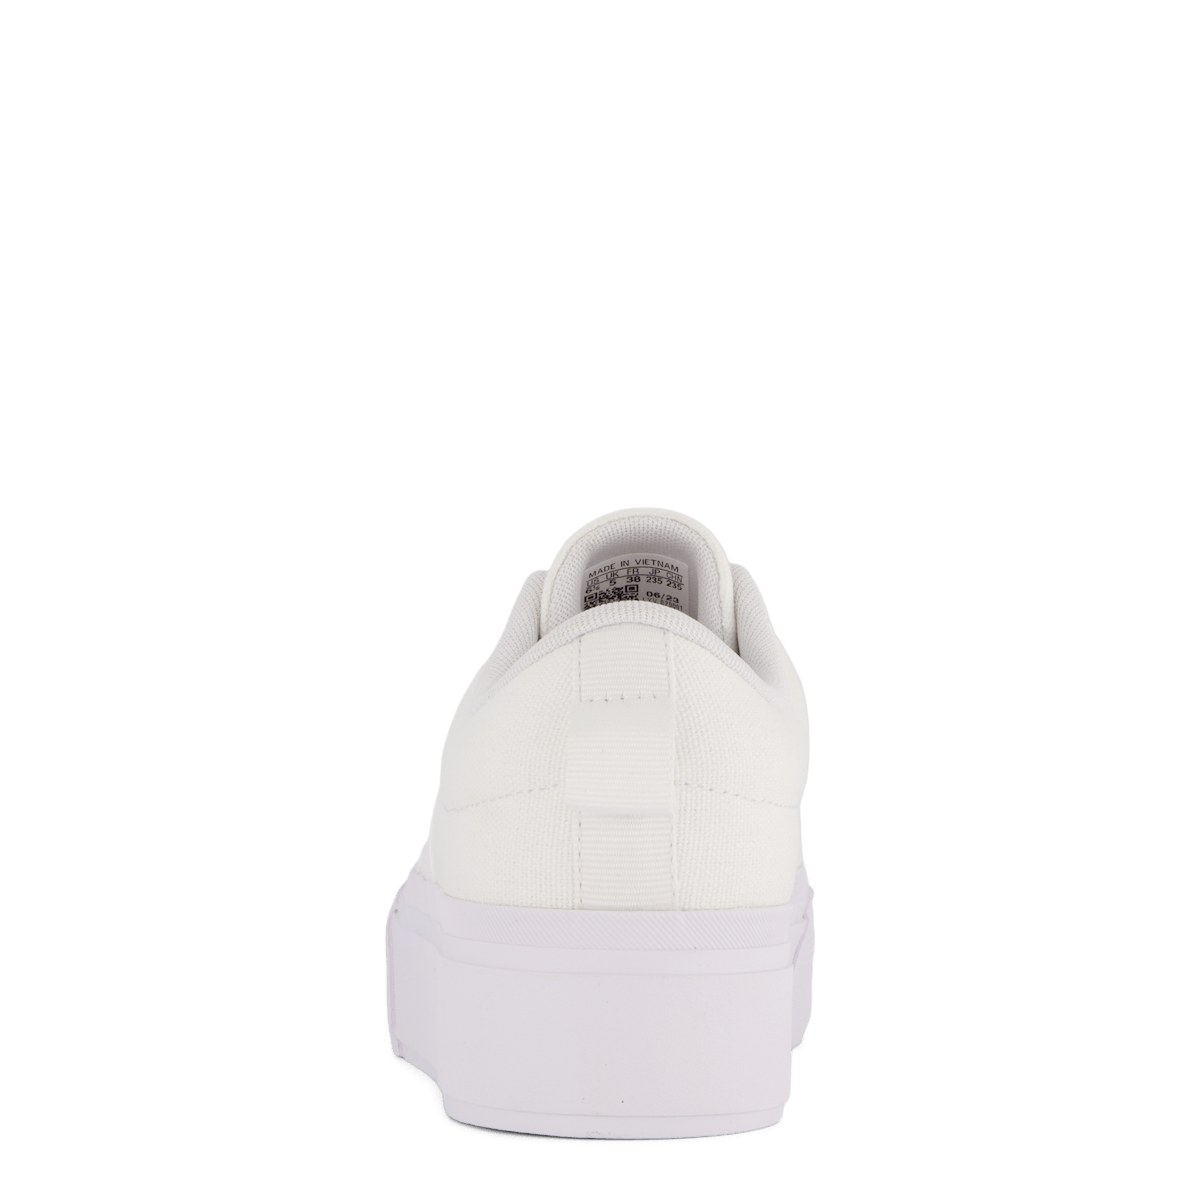 Bravada 2.0 Platform Shoes Cloud White / Cloud White / Chalk White